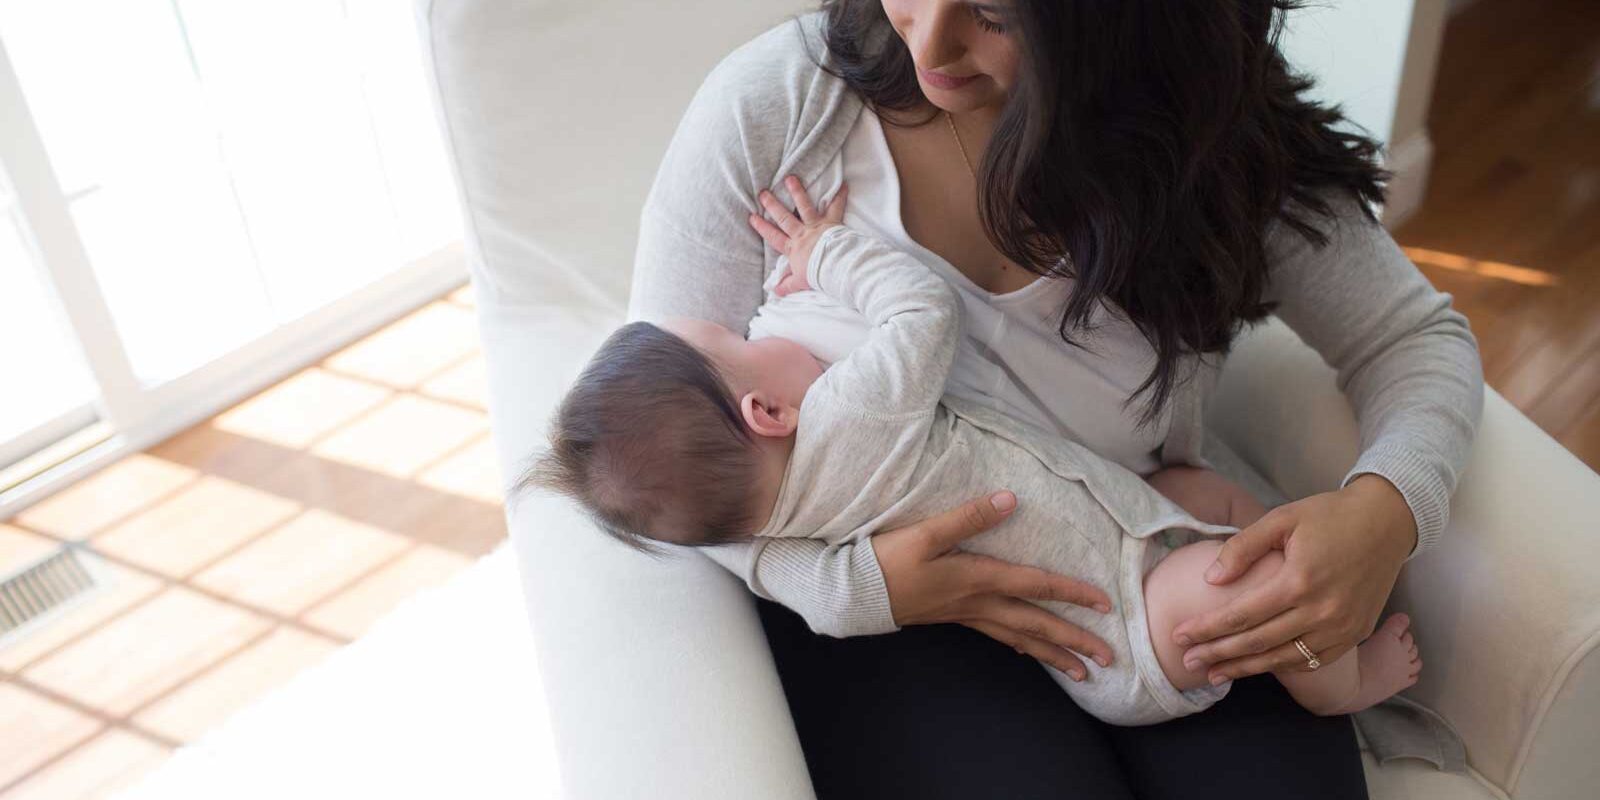 Parent breastfeeding their infant